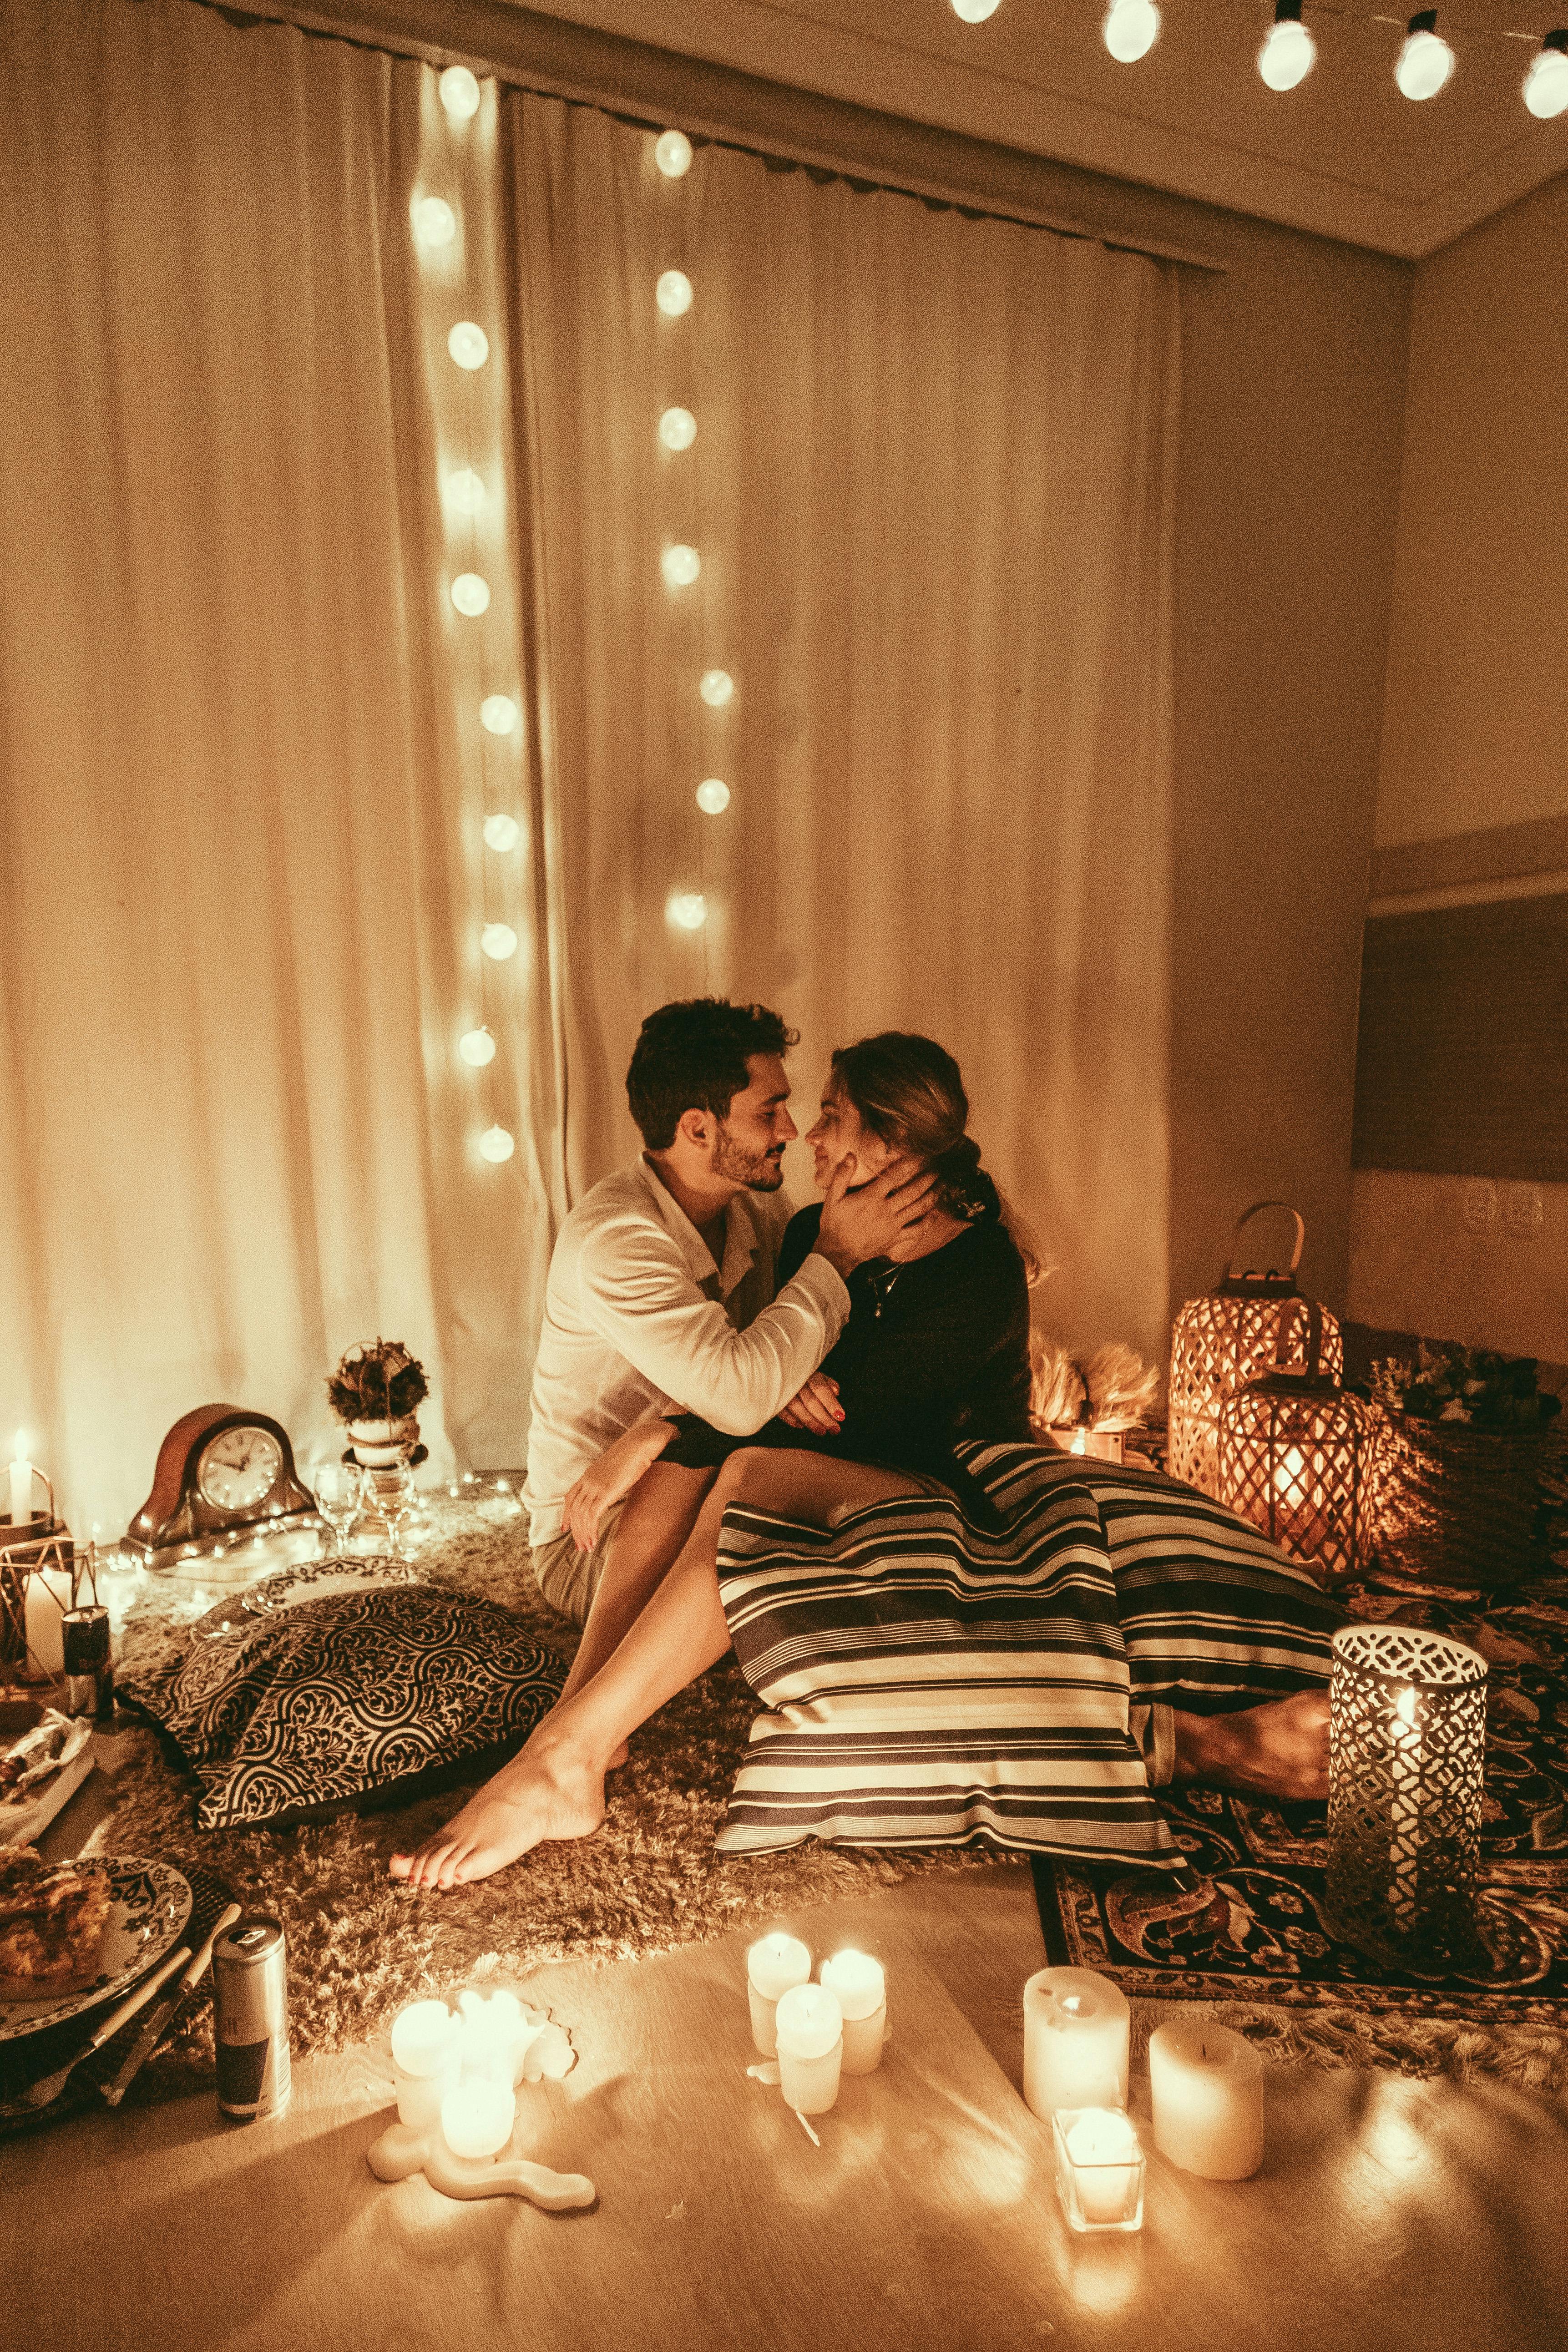 A happy couple having a romantic night | Source: Pexels